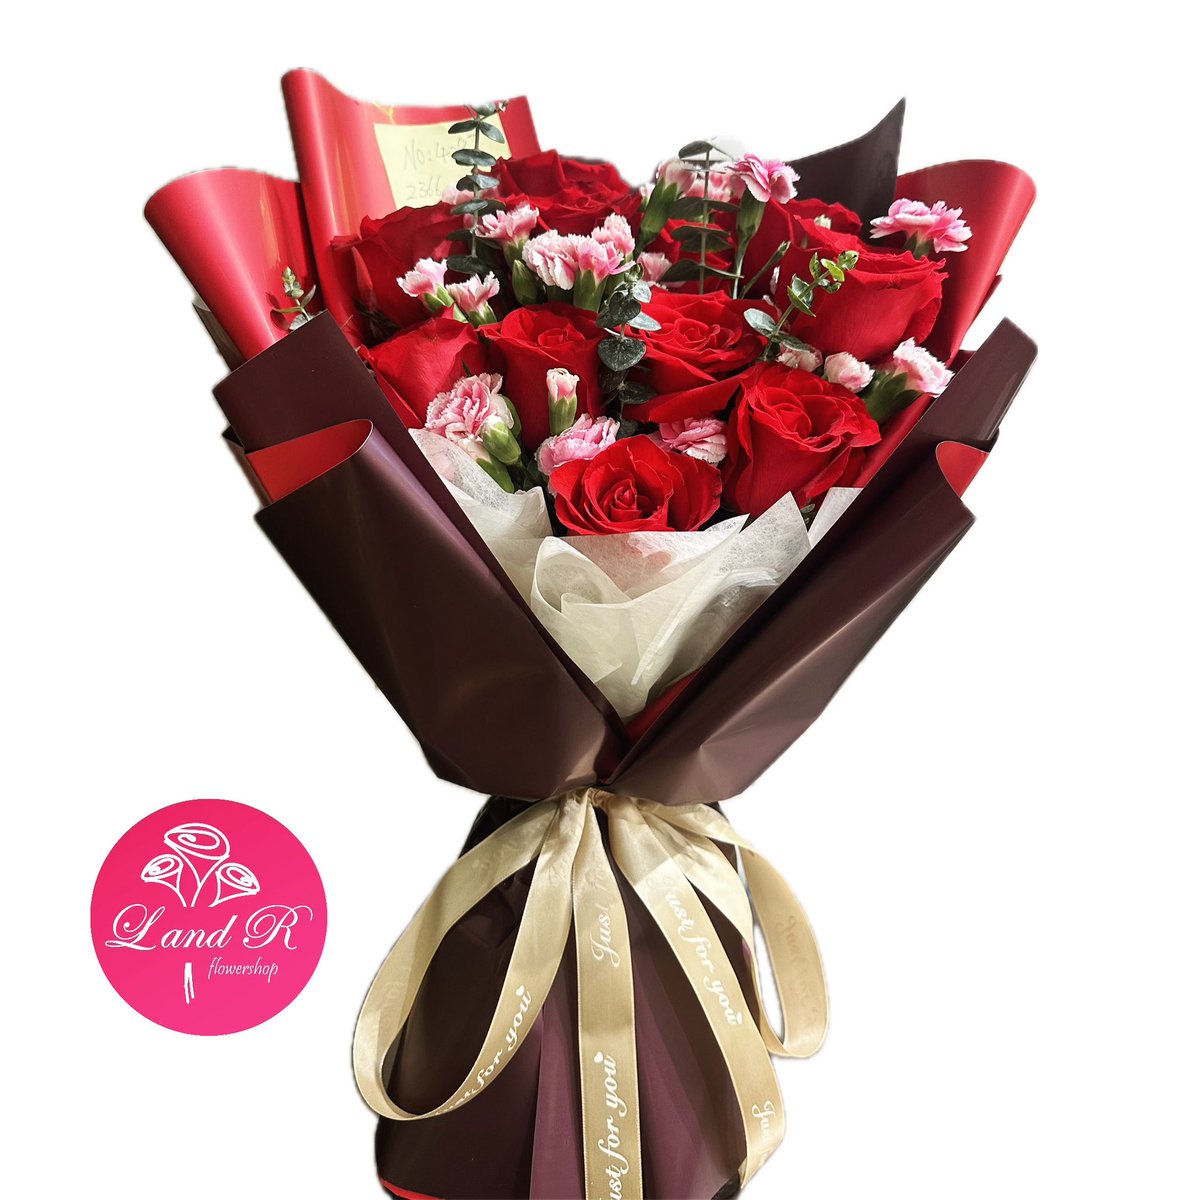 Ecuadorian Roses with bangkok rose.

Send us a message to order or call us at 

📞0998-945-1133 
📞0916-664-0707

Looking for more? You may visit our website 👇

facebook.com/landrflowersho…

#Flowers #FlowerArrangement #FlowerBouquet #LNRFlowerShop #wedeliver🚐🚙